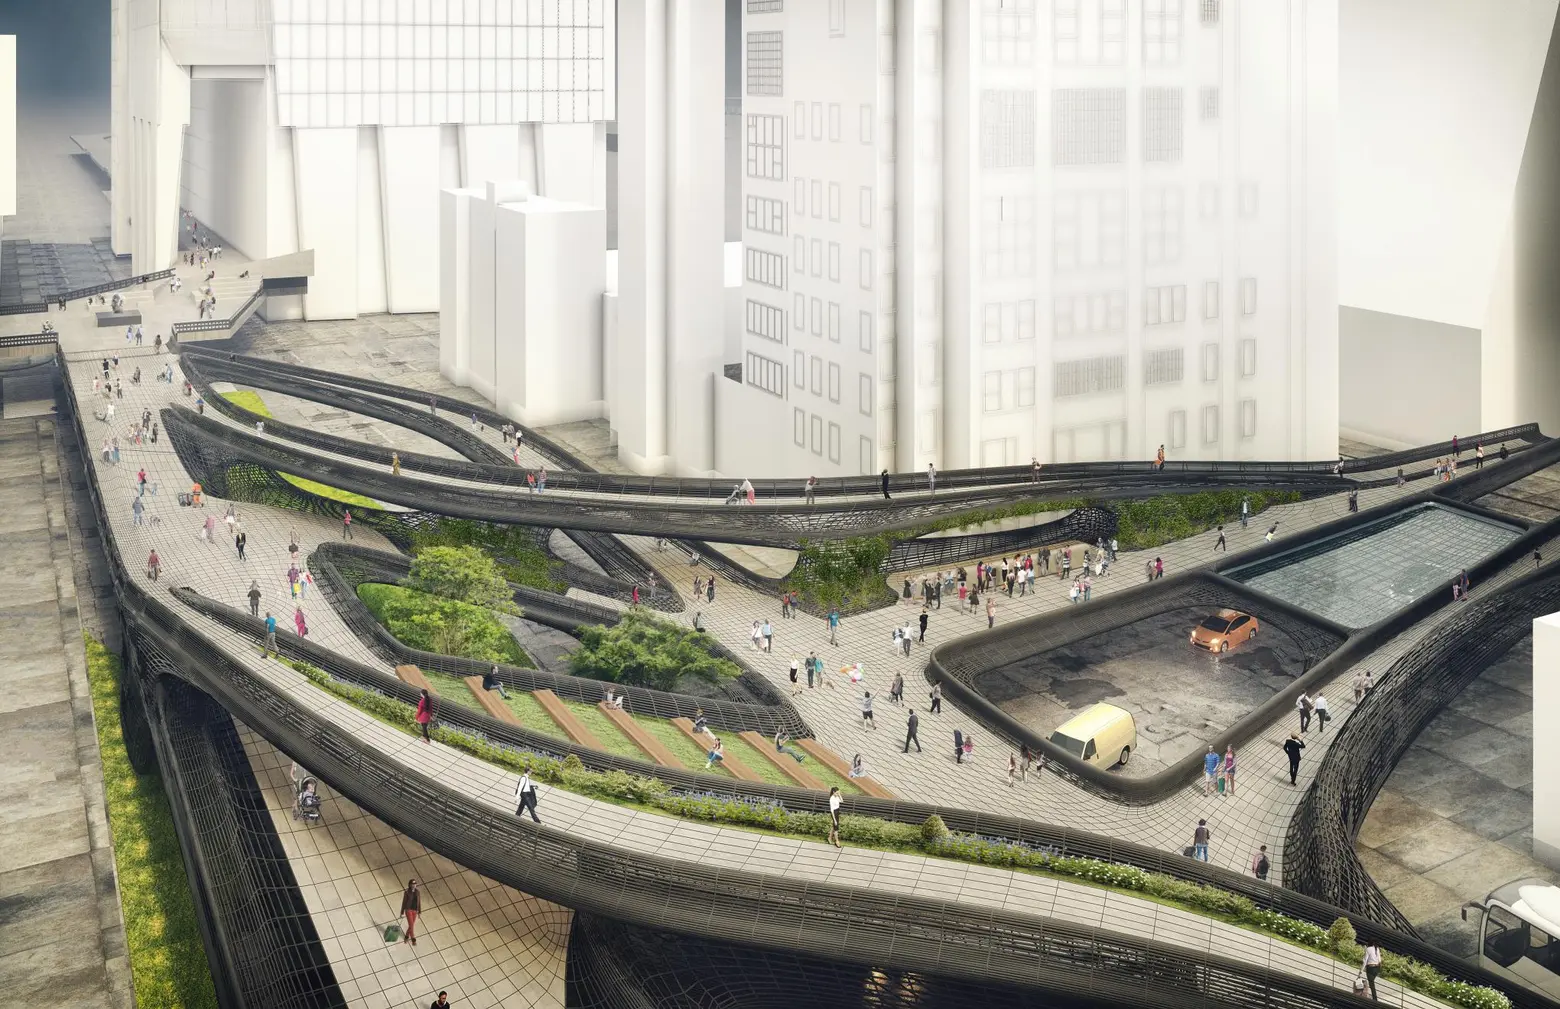 DXA Studio’s pedestrian bridge design would connect Hudson Yards and Moynihan Train Hall